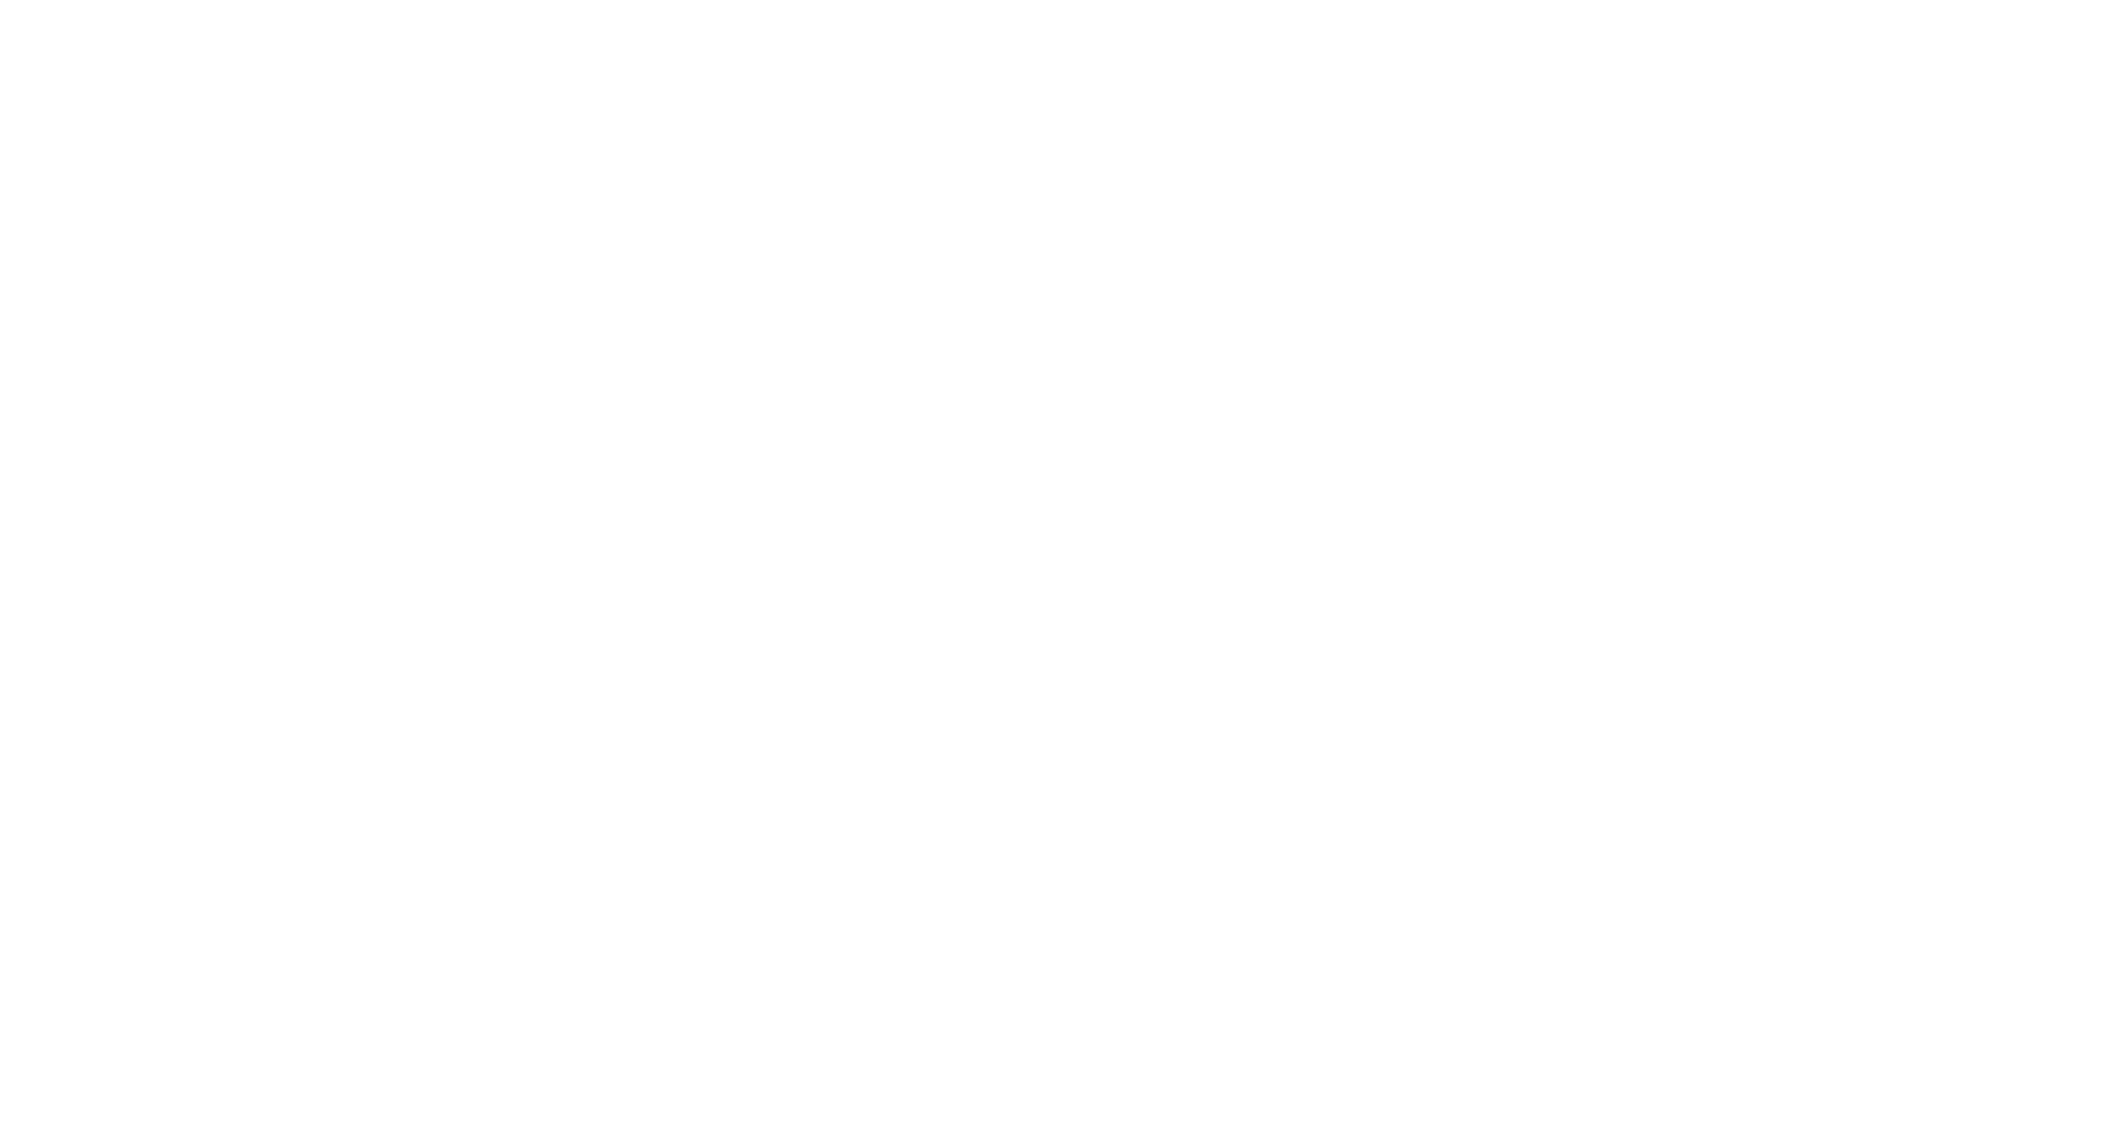 Pursway